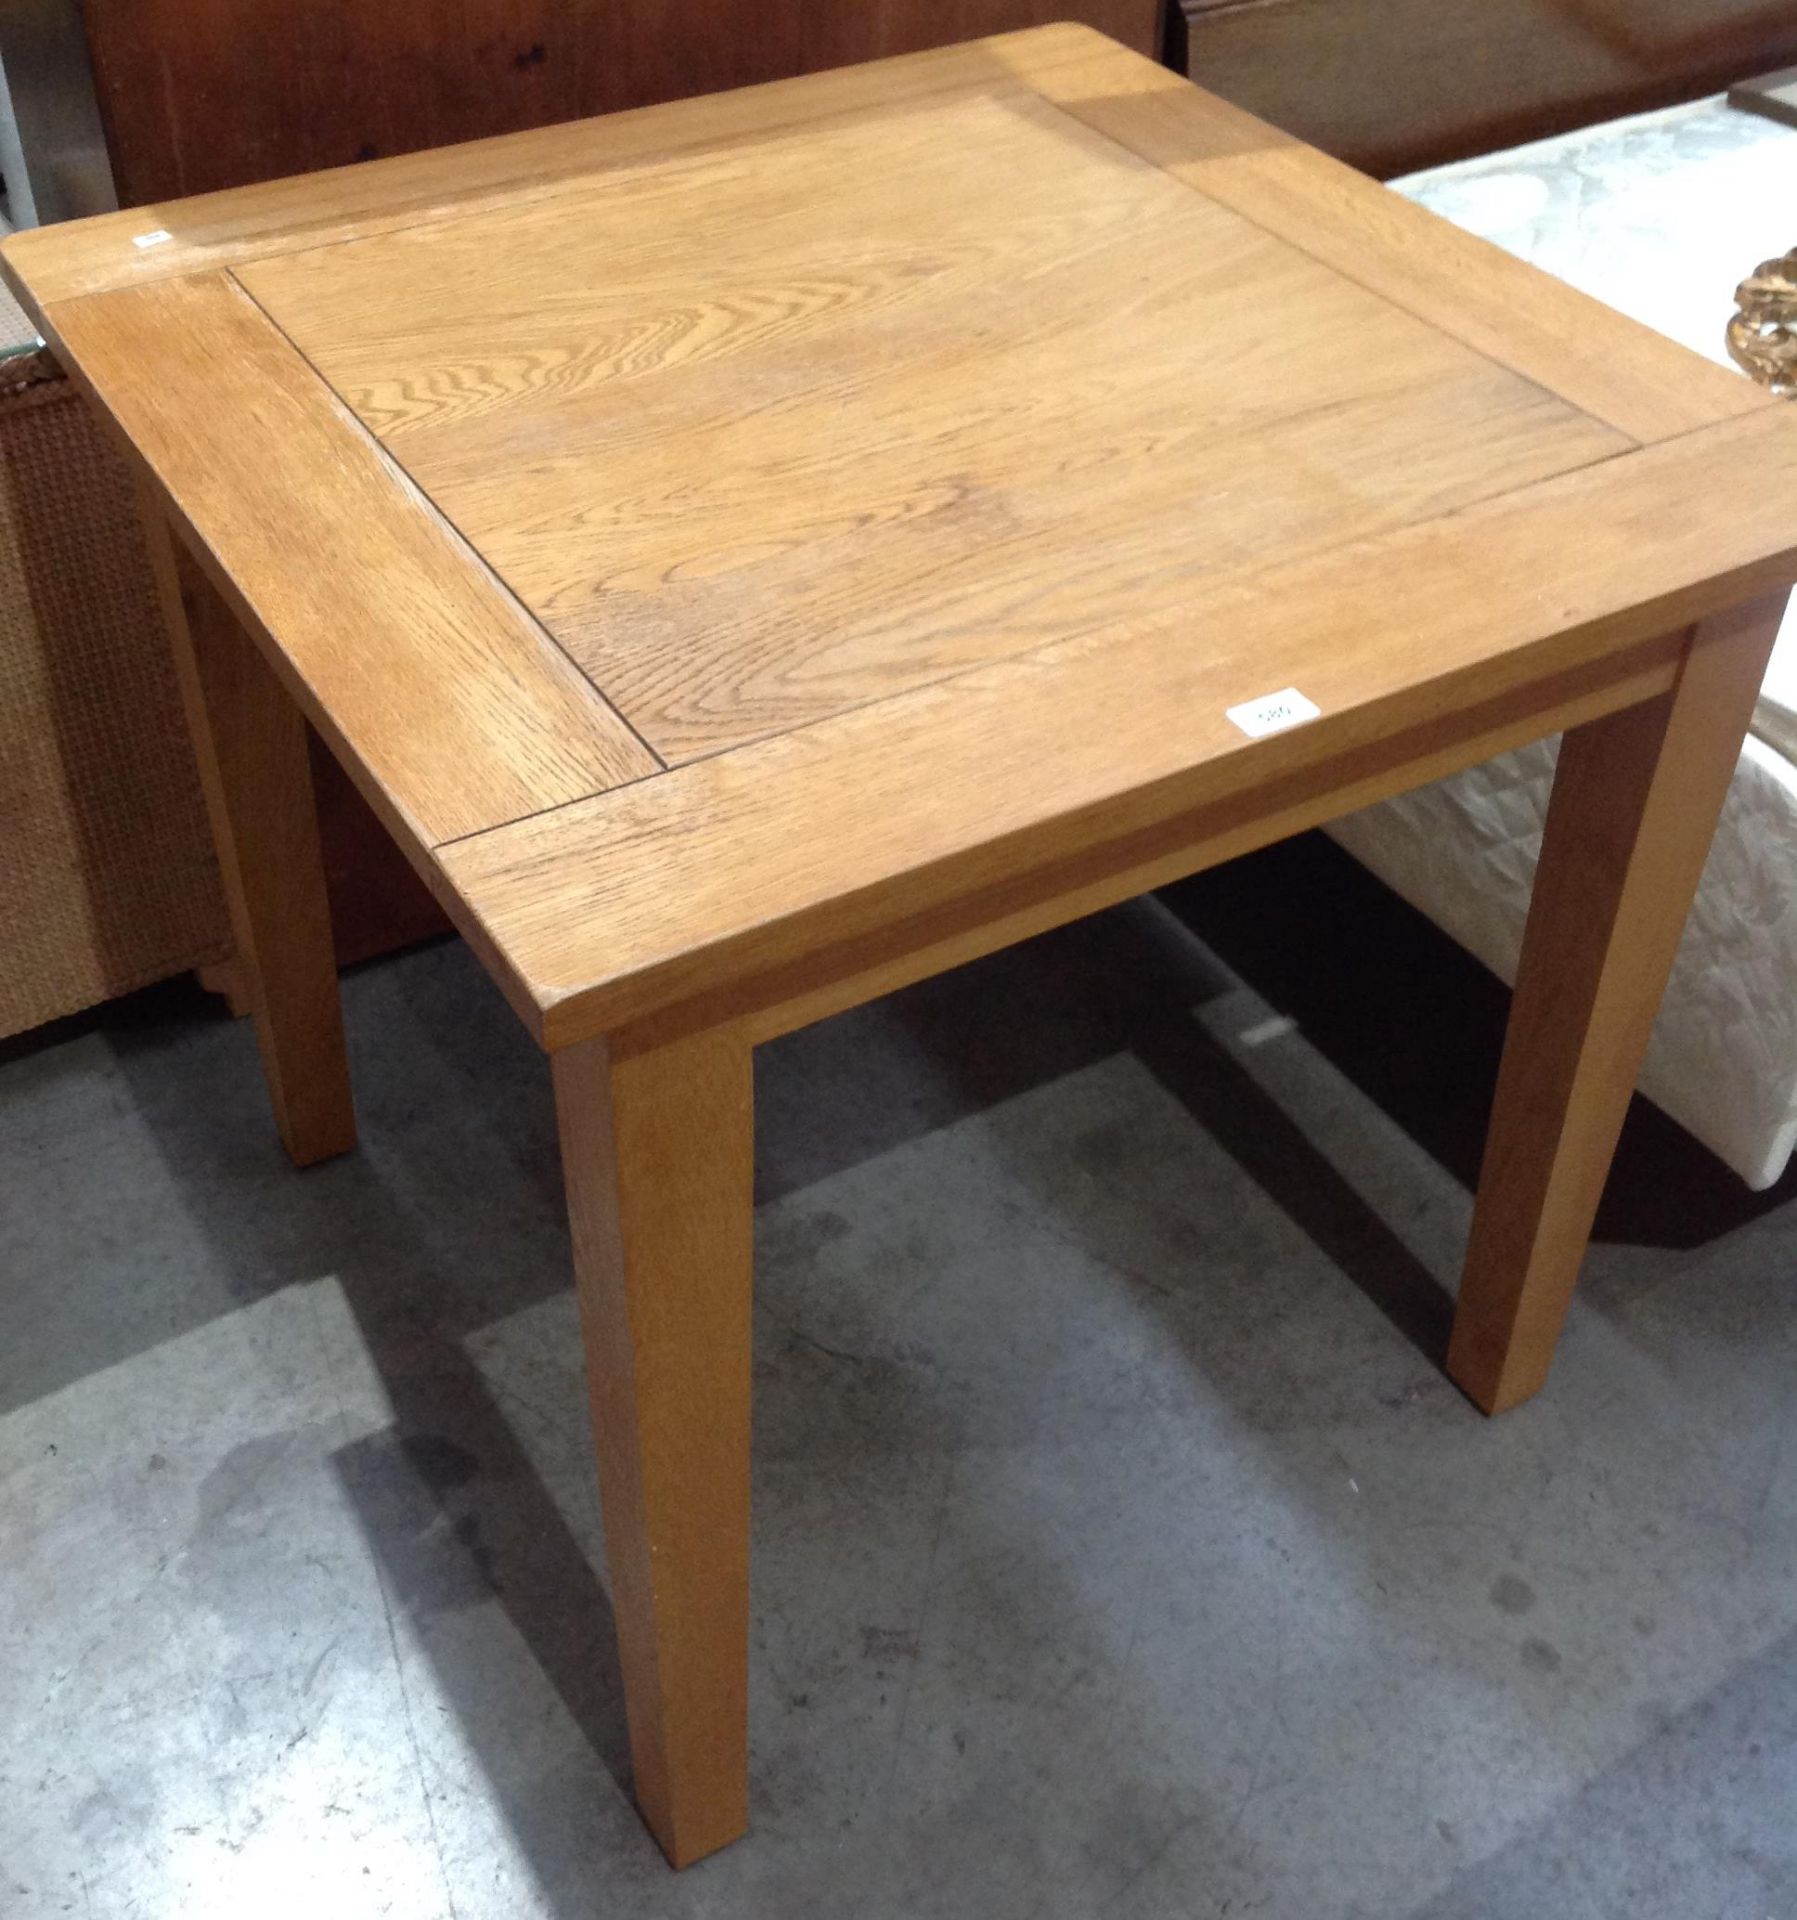 A light oak square dining table 80 x 80cm